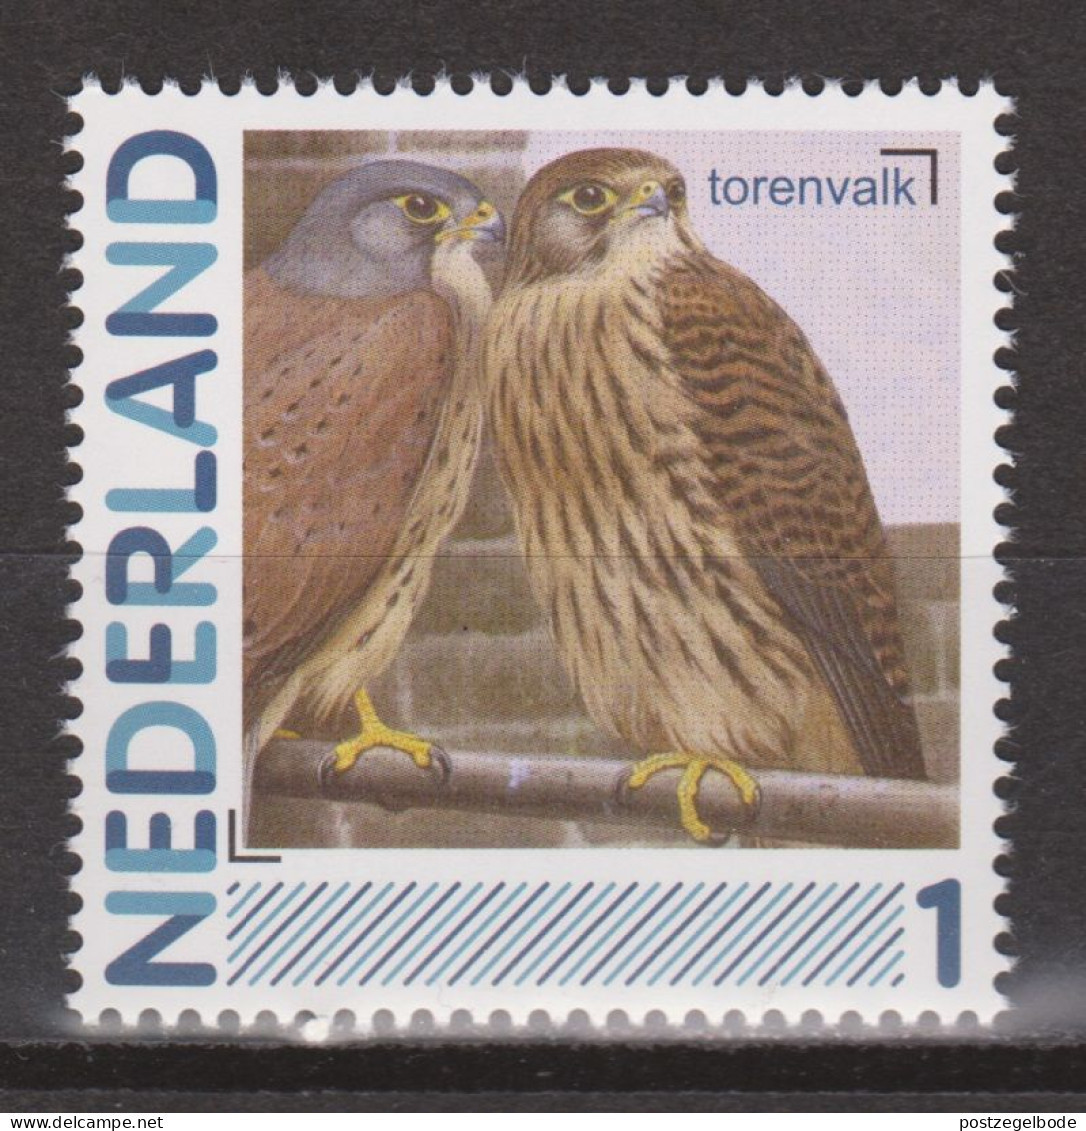 Nederland Netherlands Pays Bas MNH Roofvogel Oiseau De Proie Ave De Rapina Bird Of Prey Falcon Faucon Cerricalo Valk - Eagles & Birds Of Prey